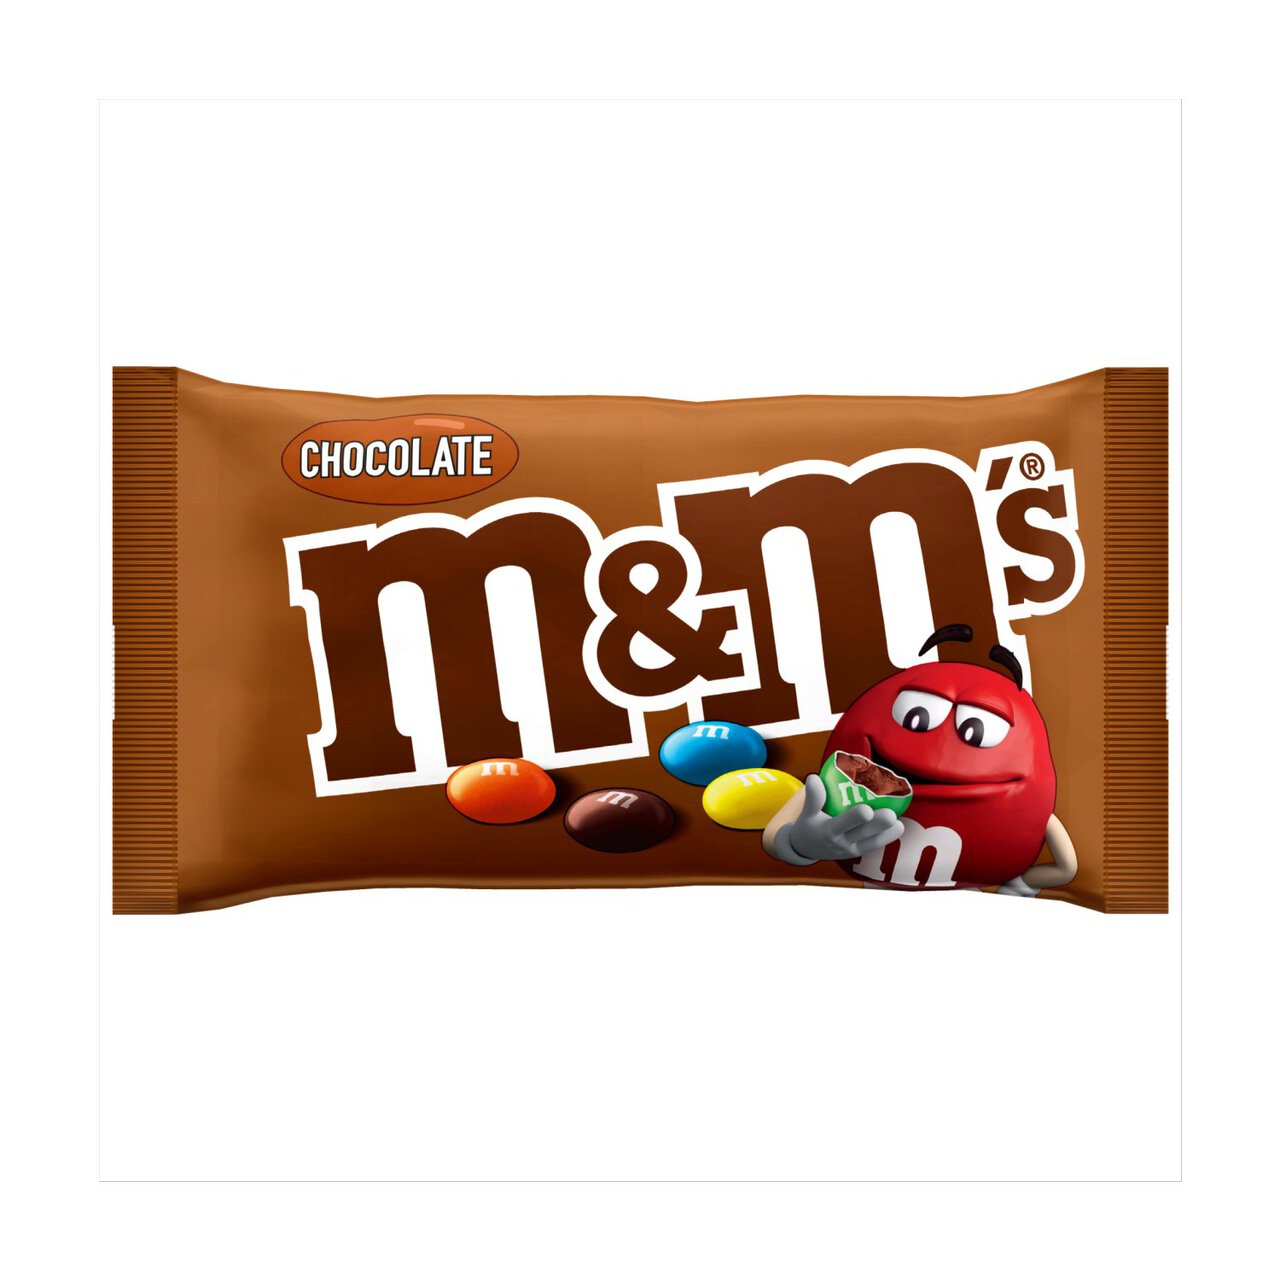 M&M's Chocolate Bag 45g